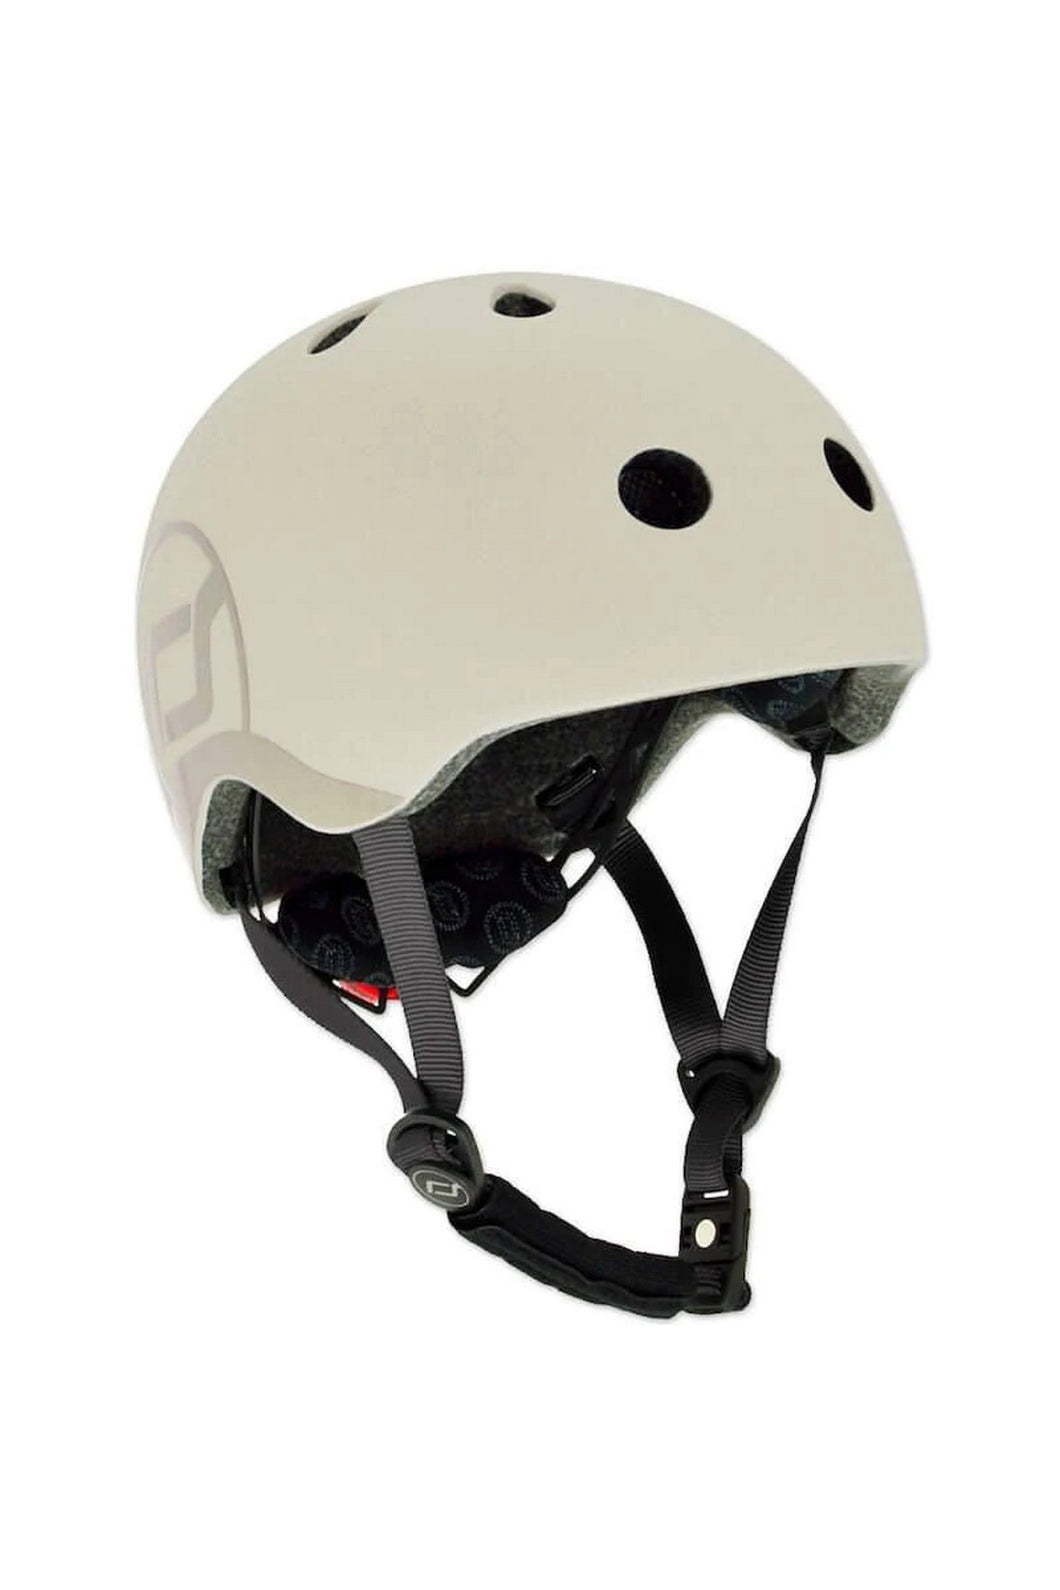 Scoot & Ride Led Helmet Xxs-S (48-52 cm)